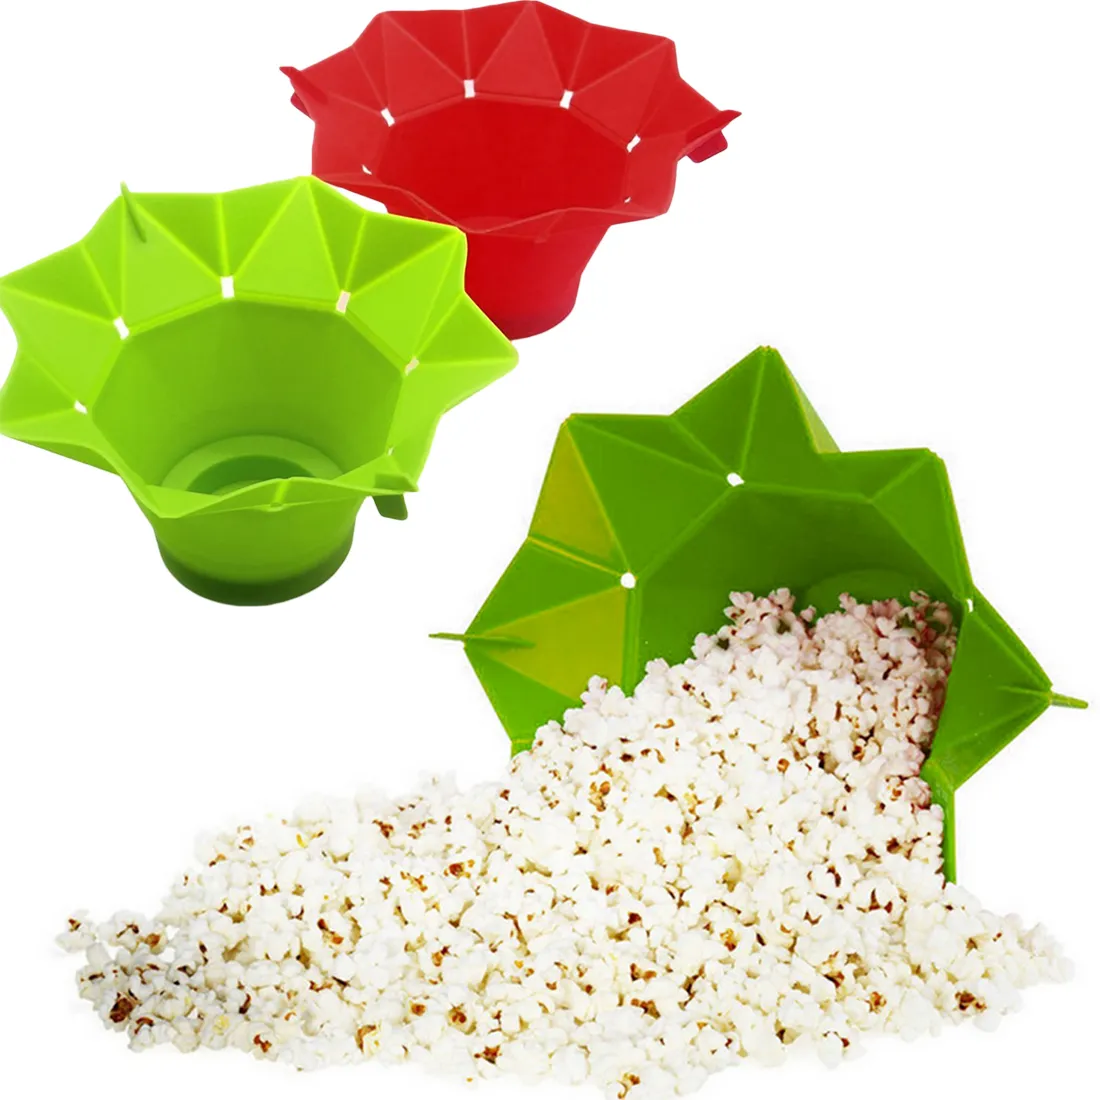 Silicone Red Green Popcorn bowl Home Microwaveable Pop Corn Maker Bowl Microwave Safe Popcorn Bakingwares Bucket 201214